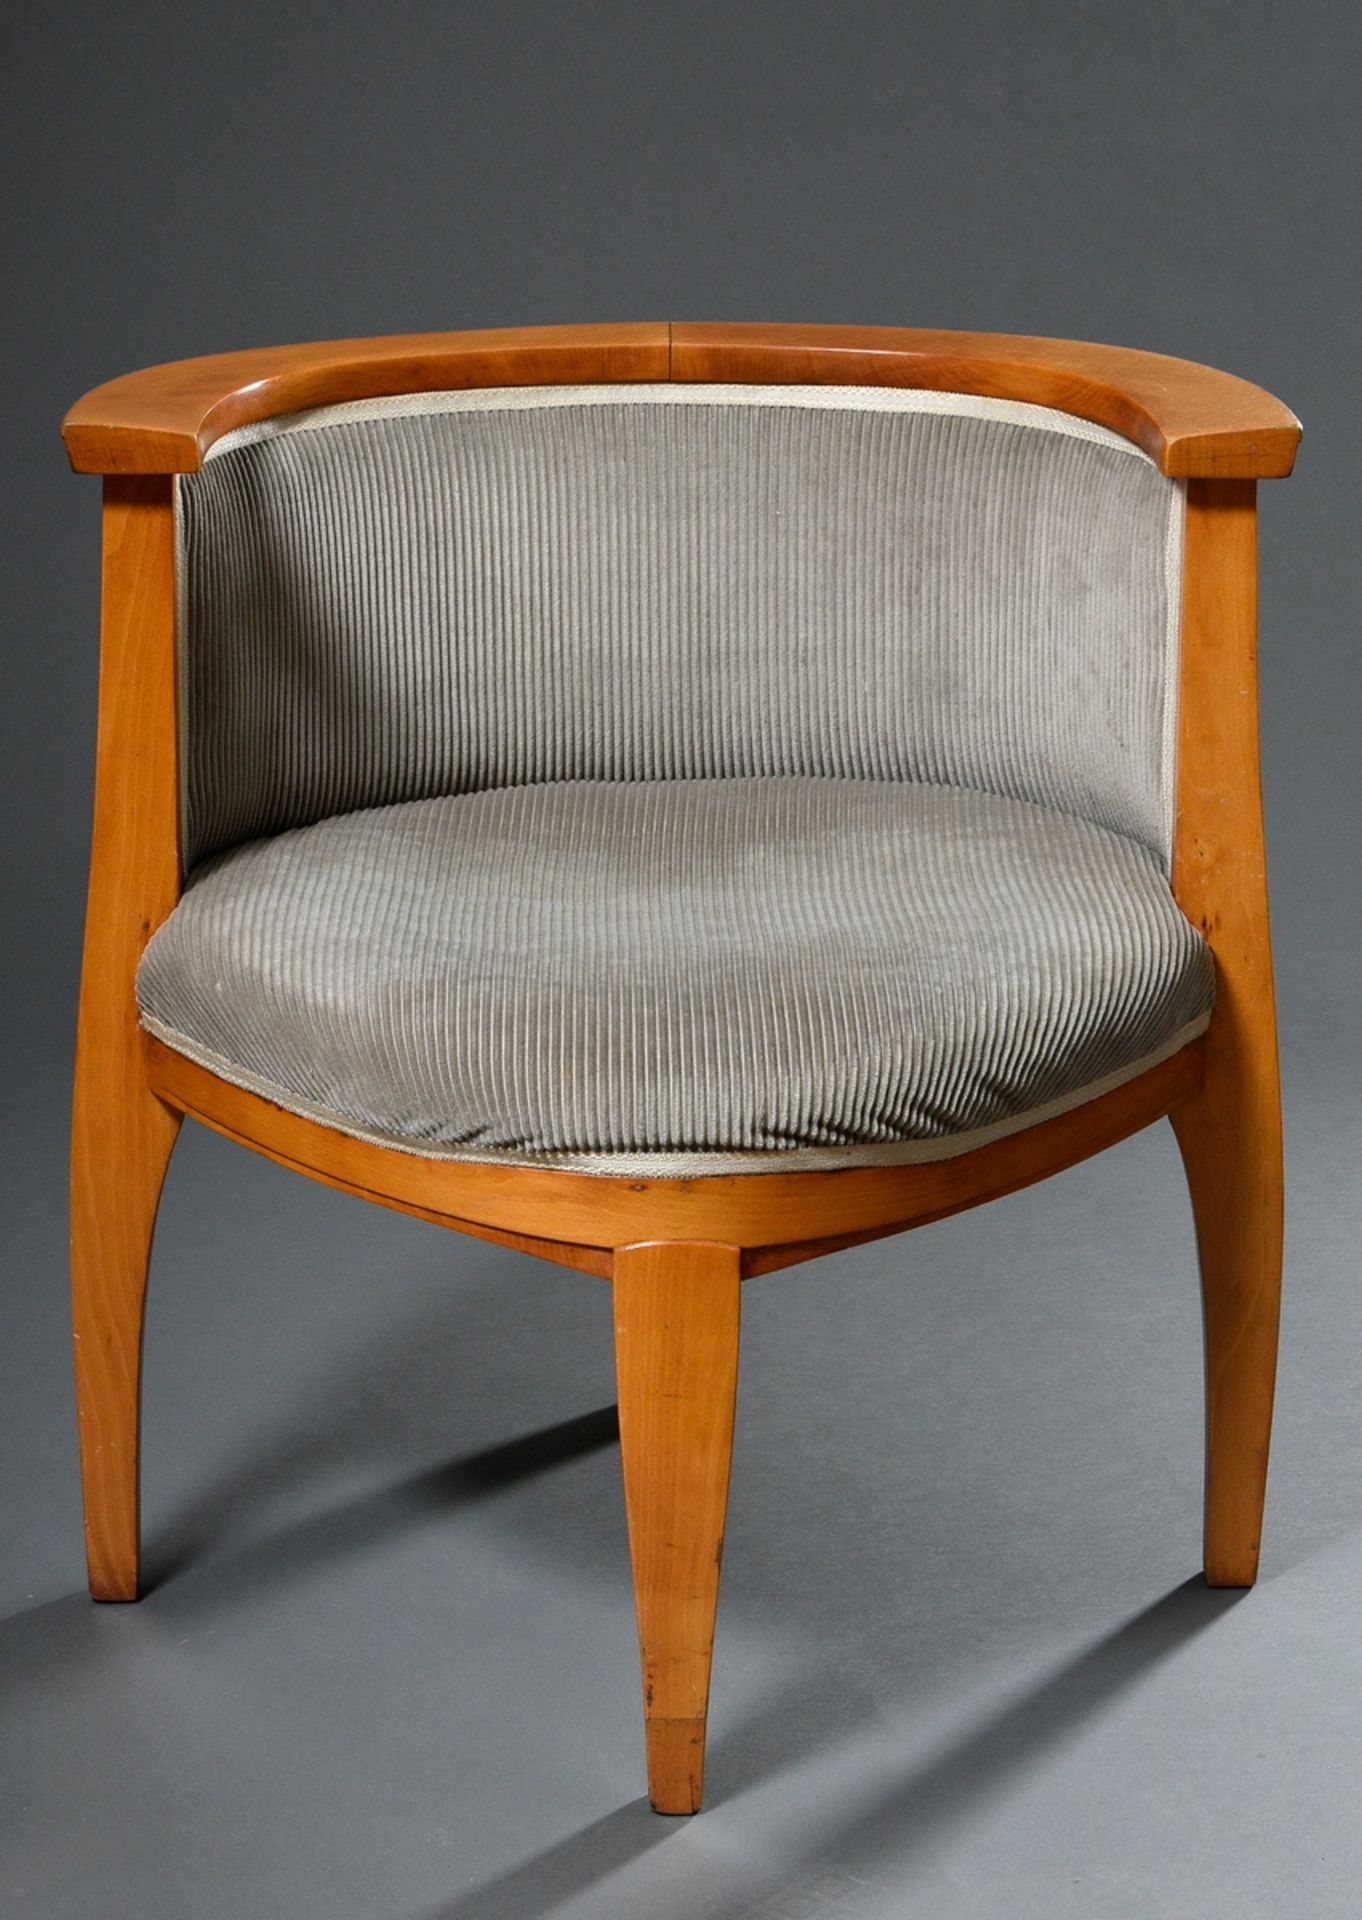 Van de Velde, Henry (1863-1957) Desk chair with a four-legged base set into a corner, shield-shaped